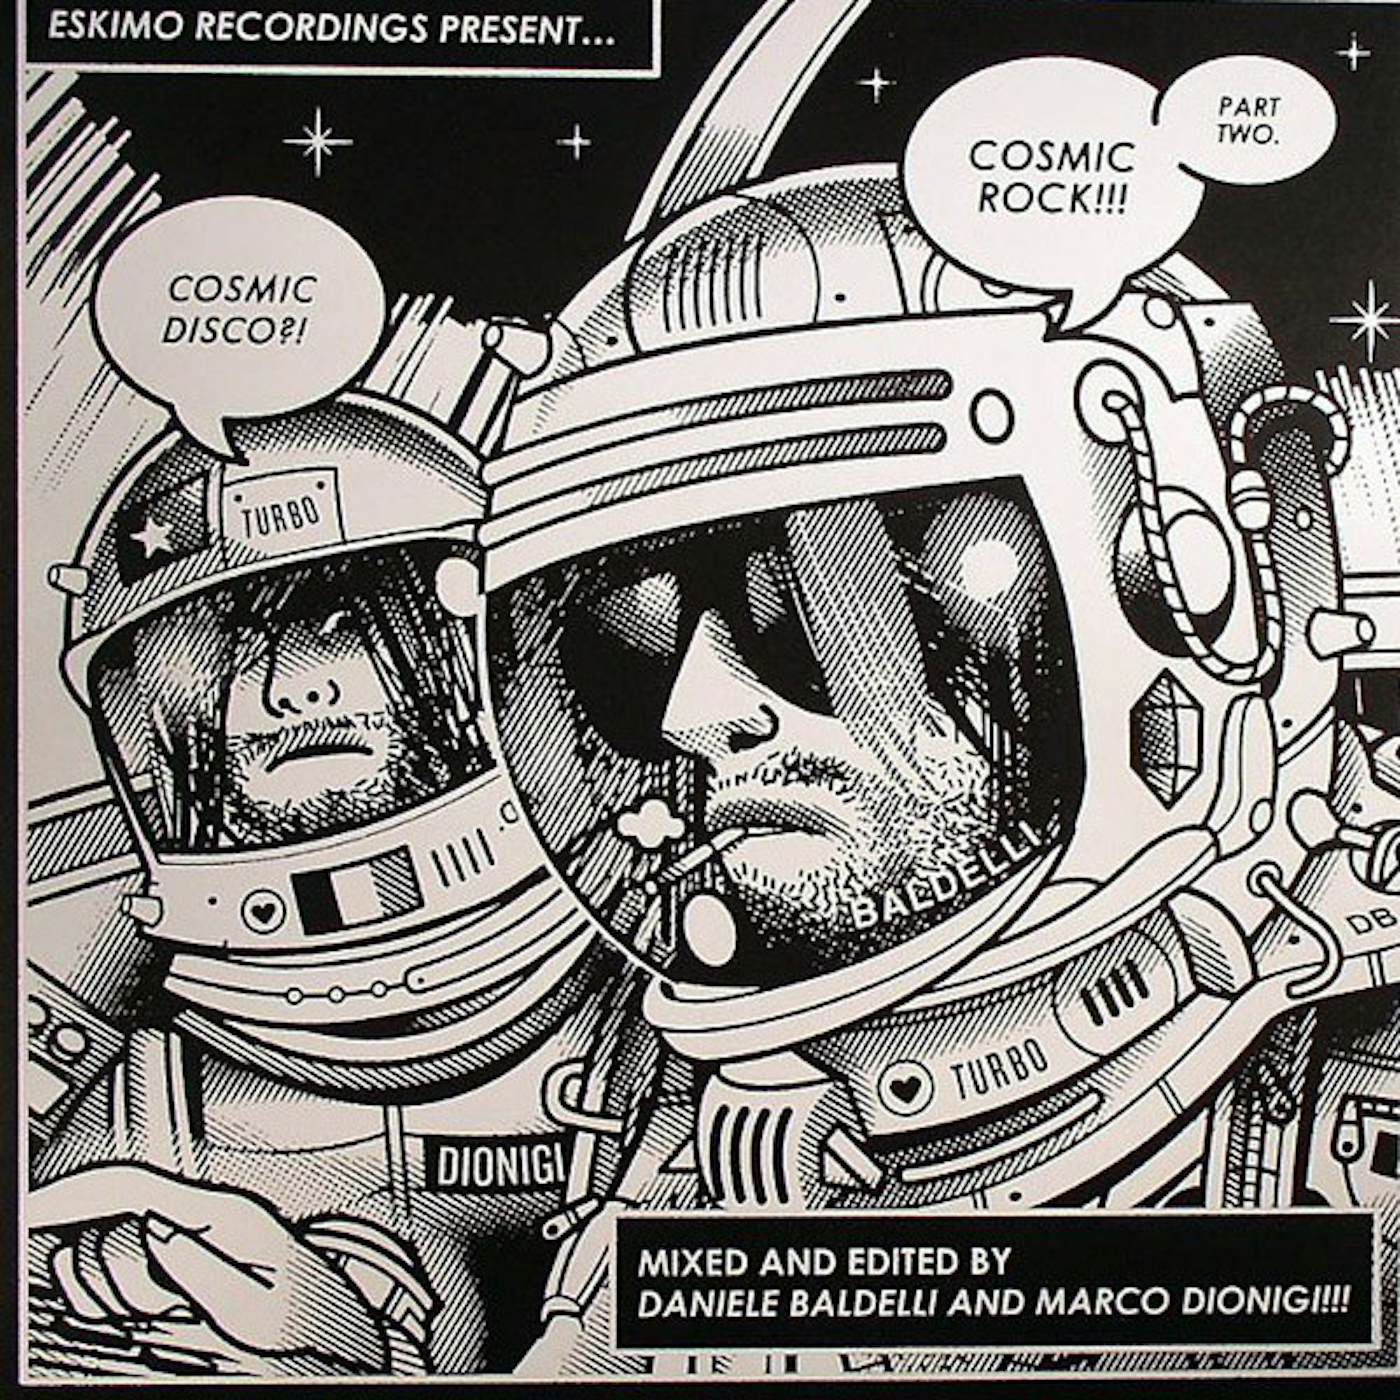 Daniele Baldelli & Marco Dionigi COSMIC DISCO COSMIC ROCK PART ONE Vinyl Record